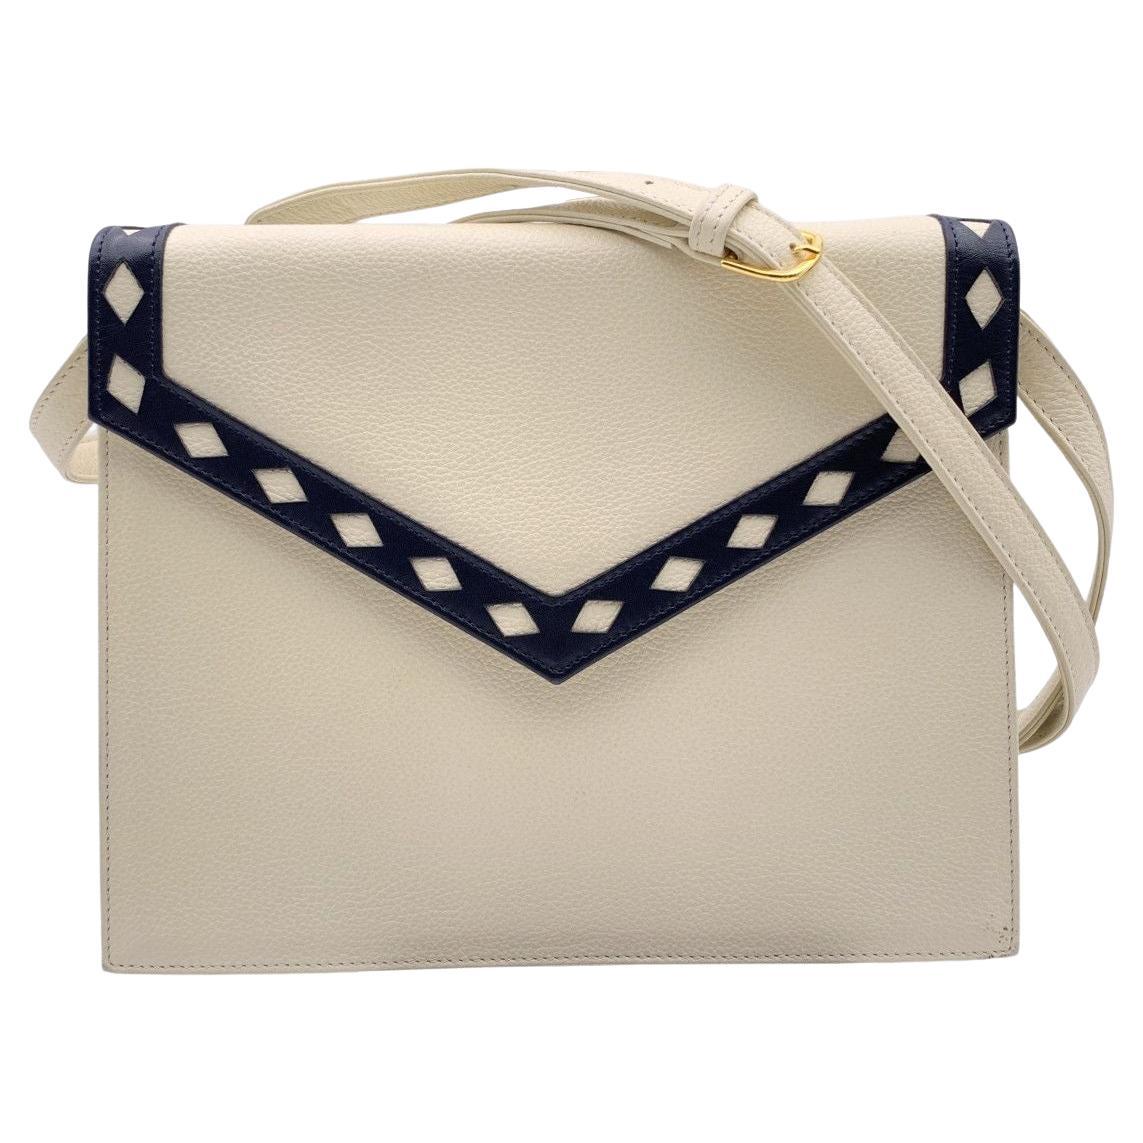 Yves Saint Laurent Vintage White and Blue Leather Flap Shoulder Bag